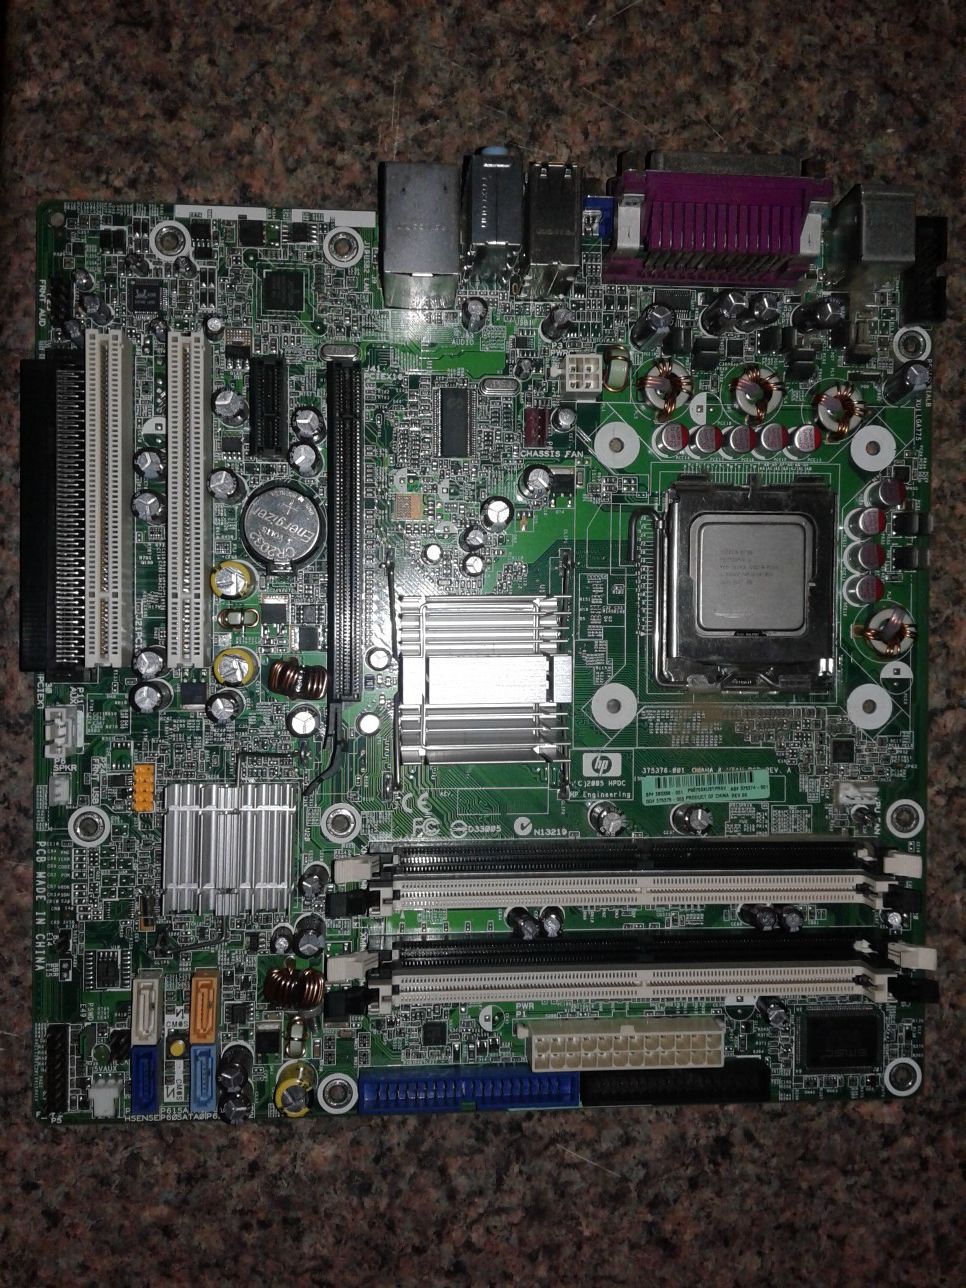 Hp motherboard w intel pentium processor